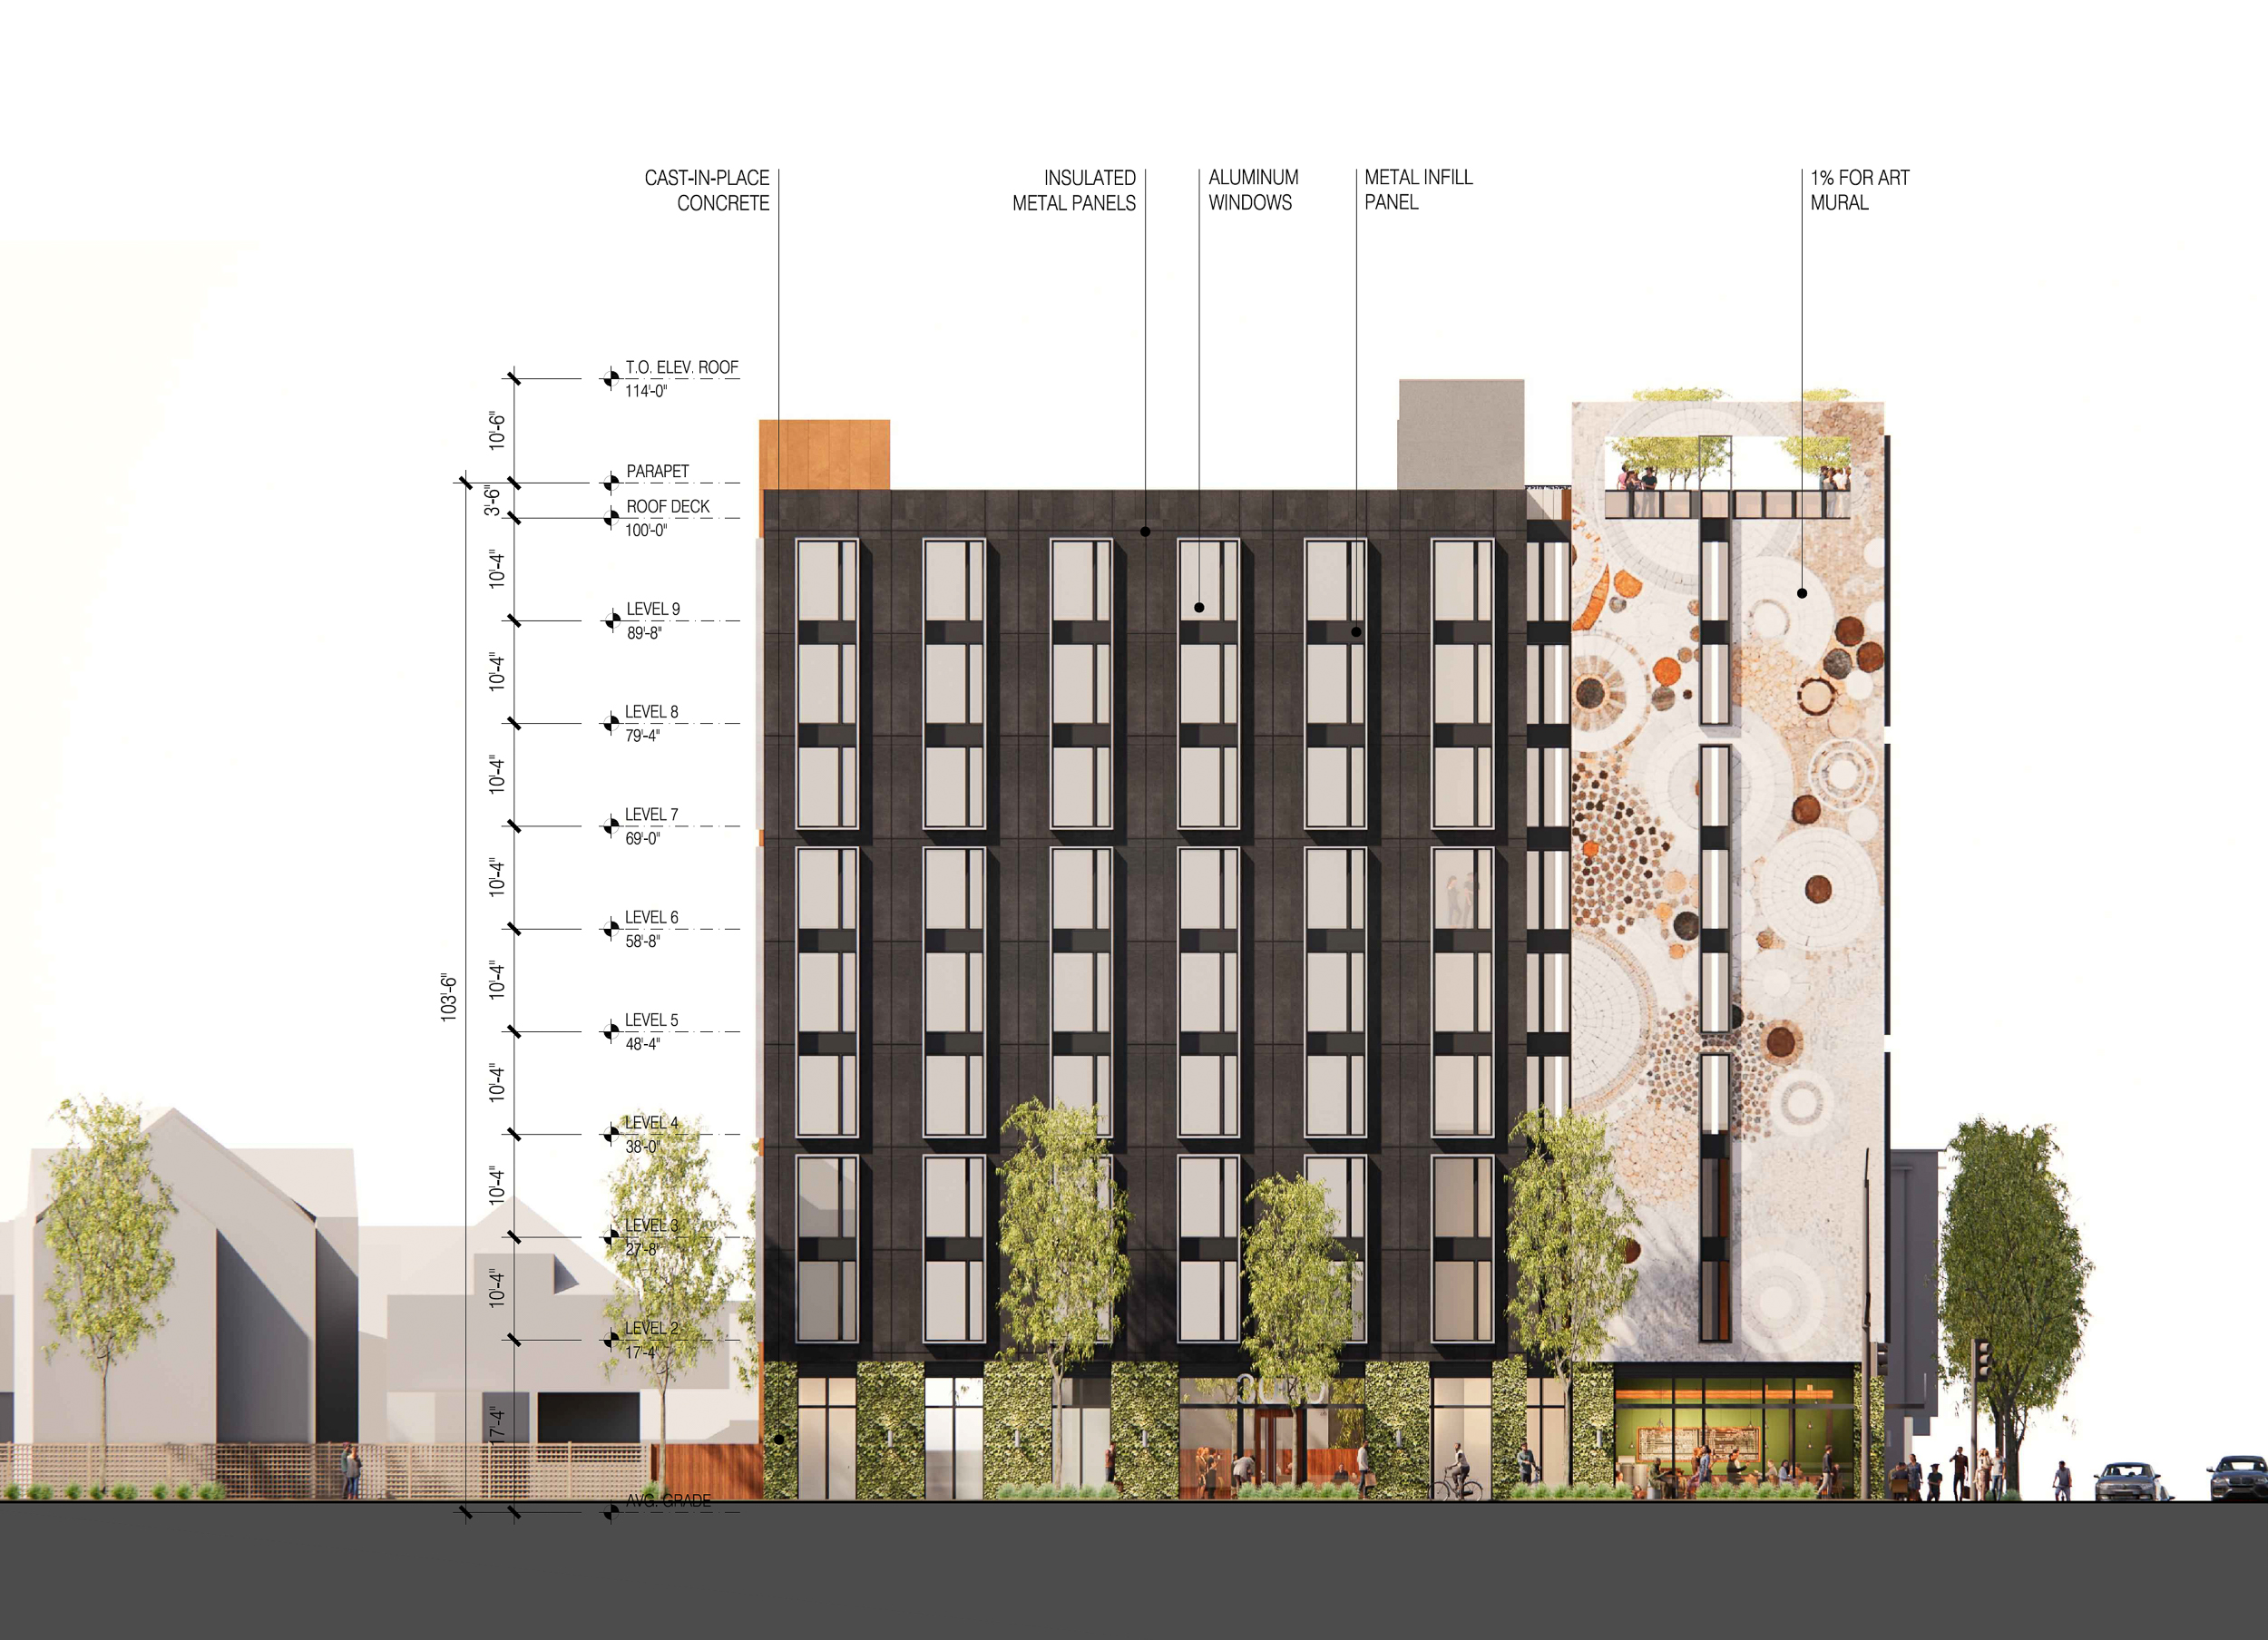 3000 Shattuck Avenue vertical elevation, rendering by Trachtenberg Architects